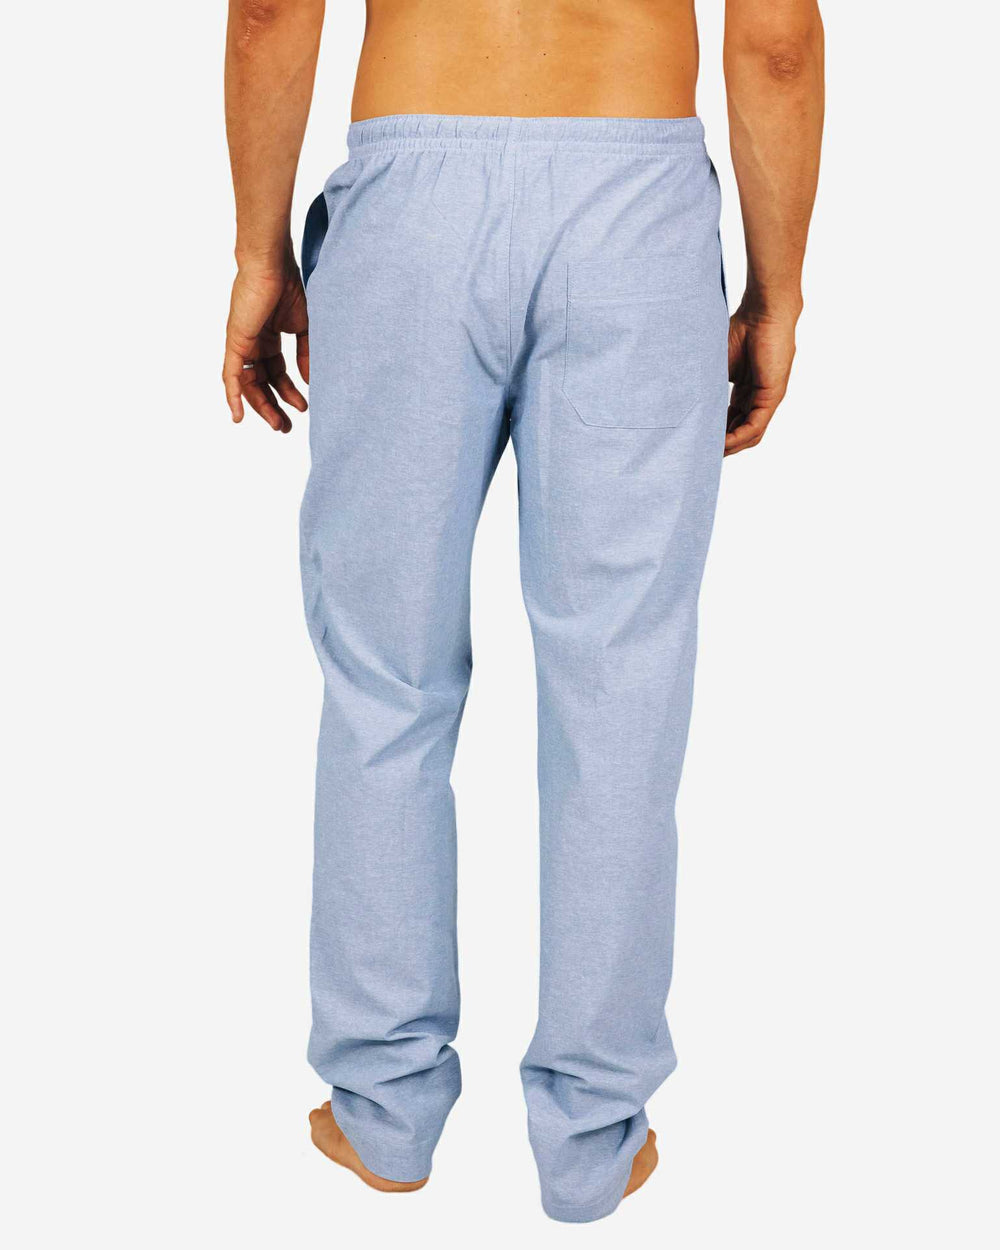 Mens pyjama bottoms - denim light blue